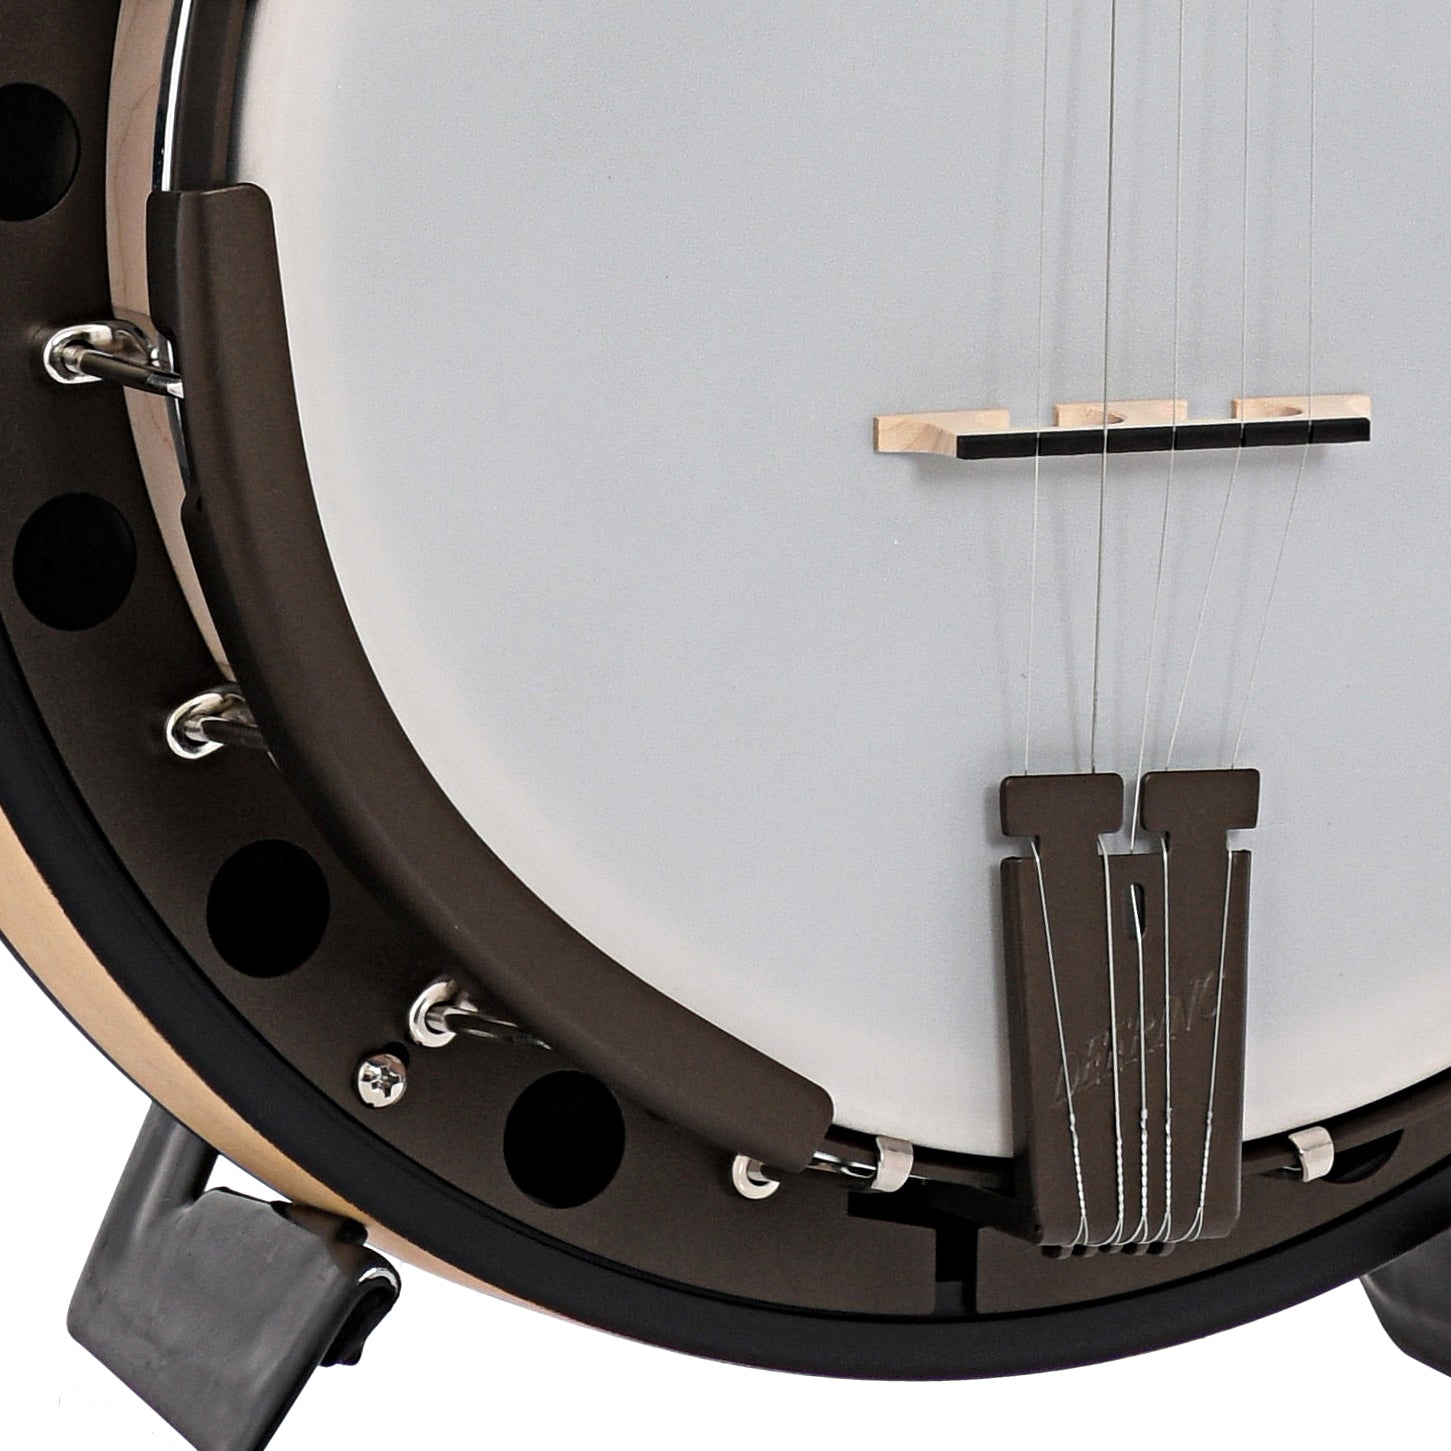 Bridge and Tailpiece of Deering Goodtime 2 Limited Edition Bronze Resonator Banjo, Shopworn